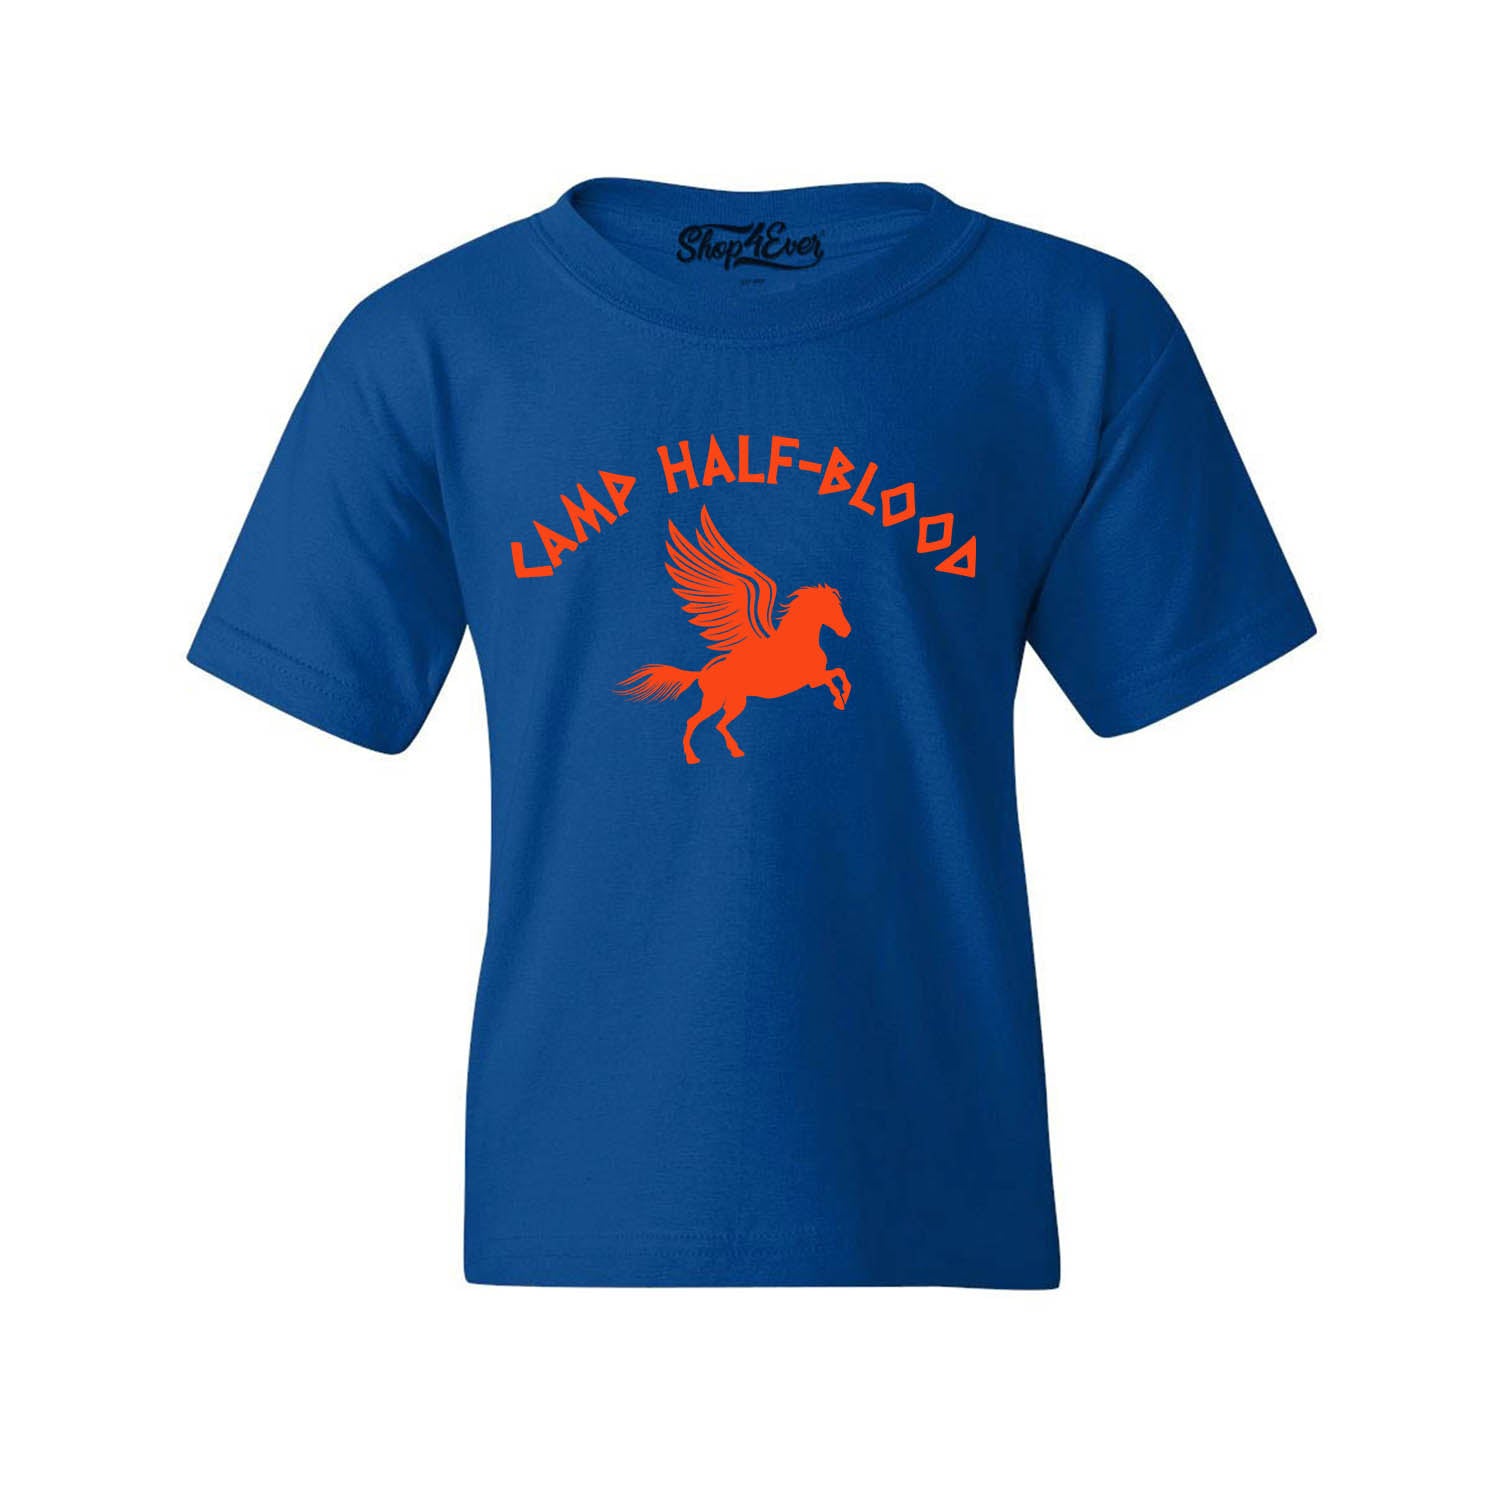 Camp Half Blood Orange Demigods Tee Youth's T-Shirt